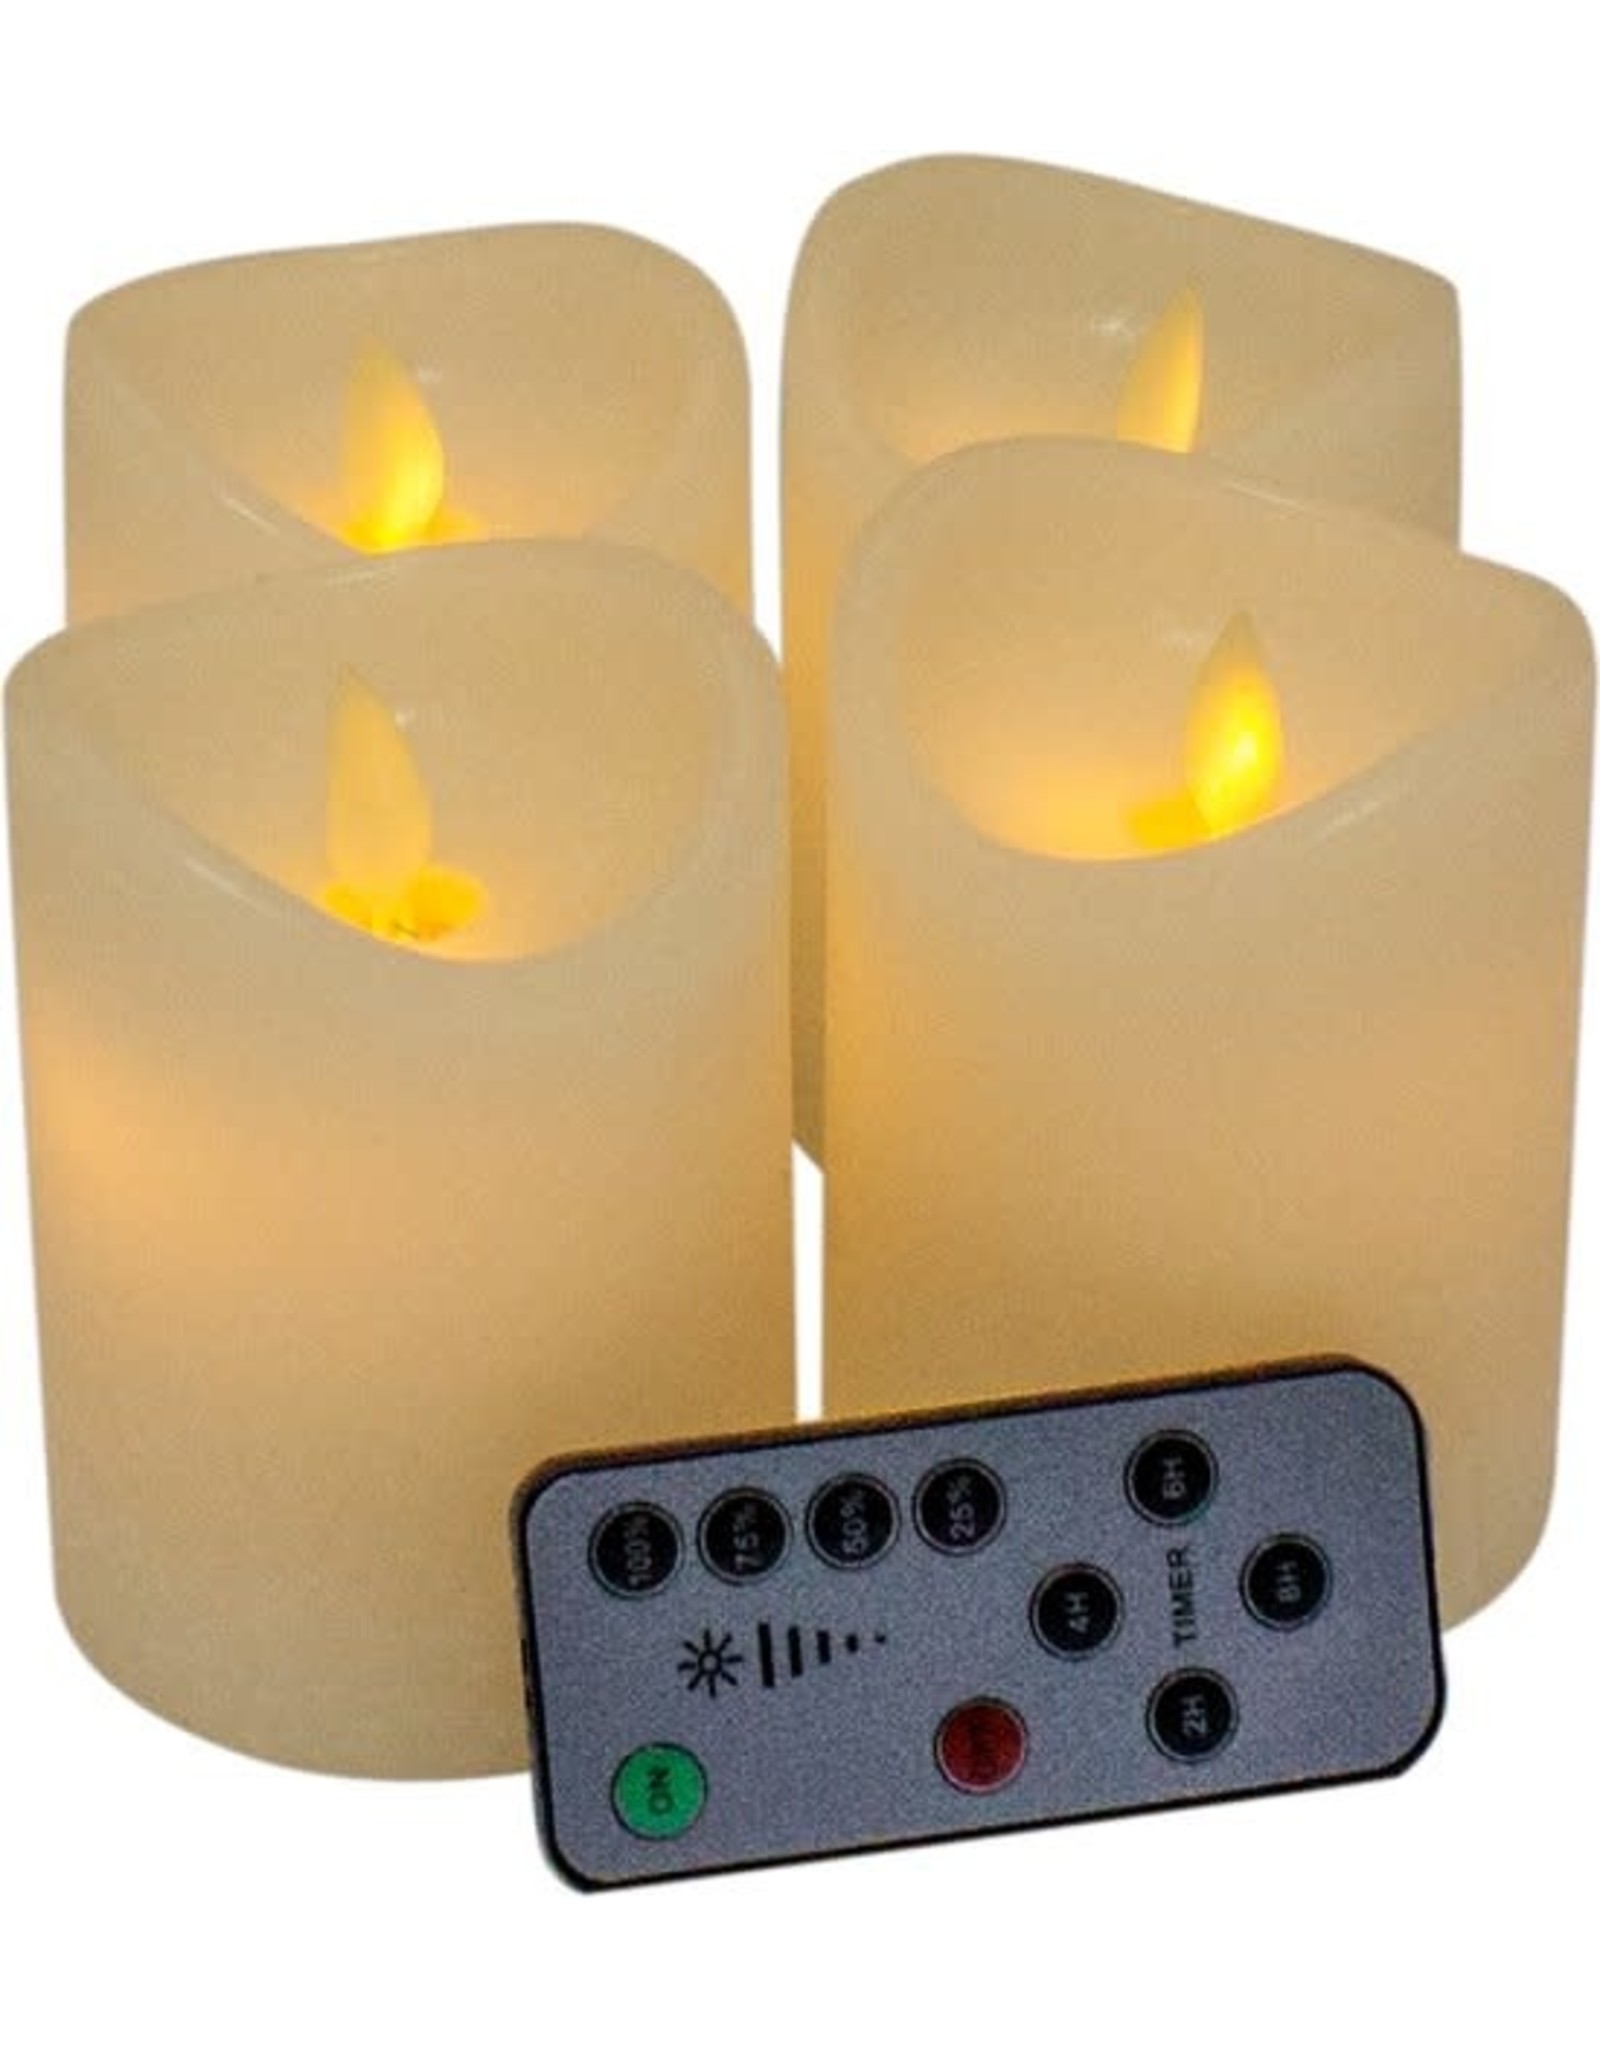 ComfortTrends Kaars LED Verlichting - Met dansende vlam.